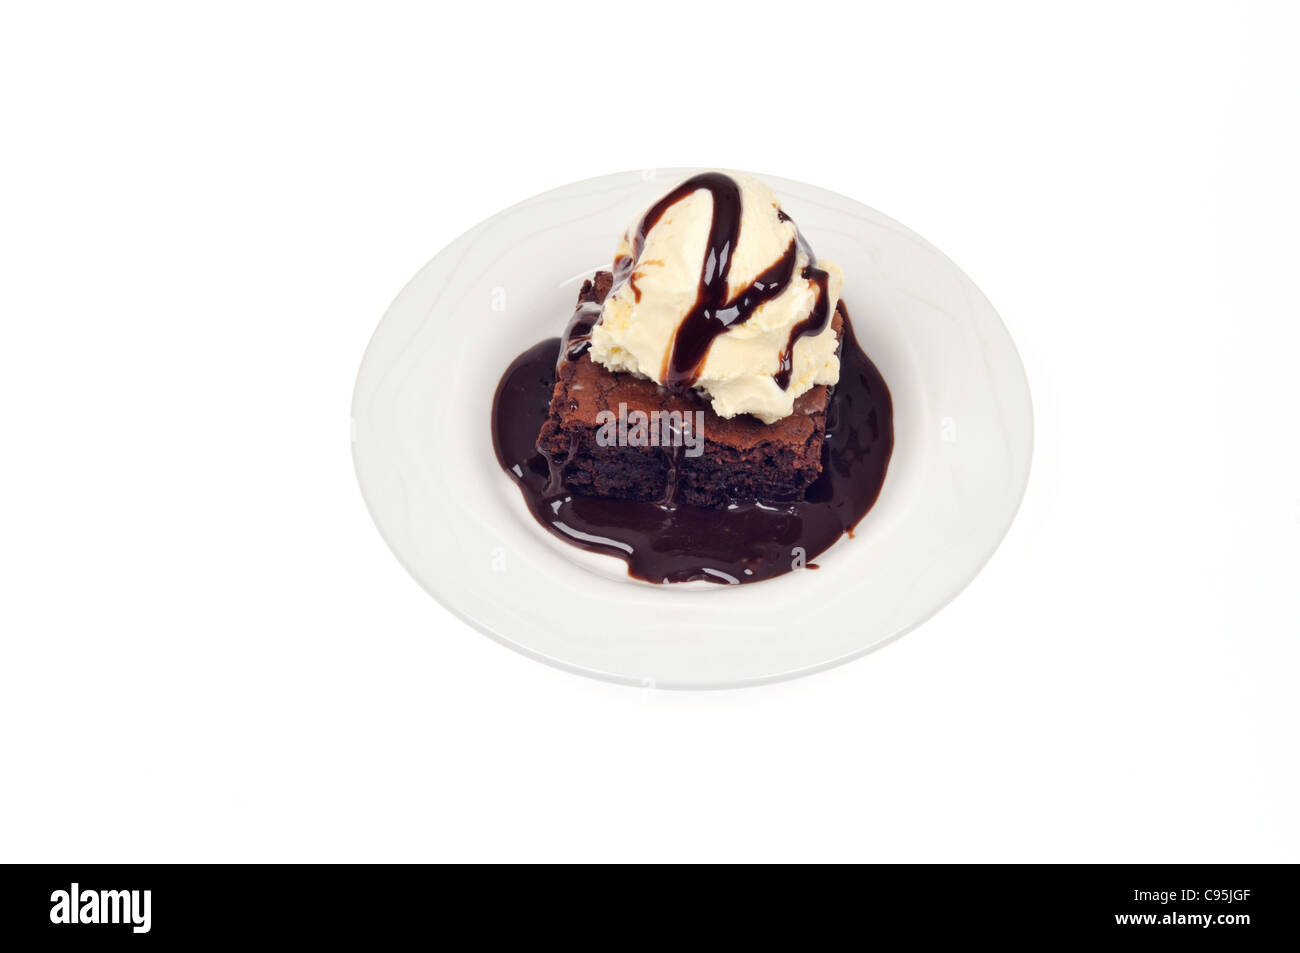 Chocolate fudge brownie and  vanilla ice cream with chocolate sauce on white plate on white background cutout. Stock Photo